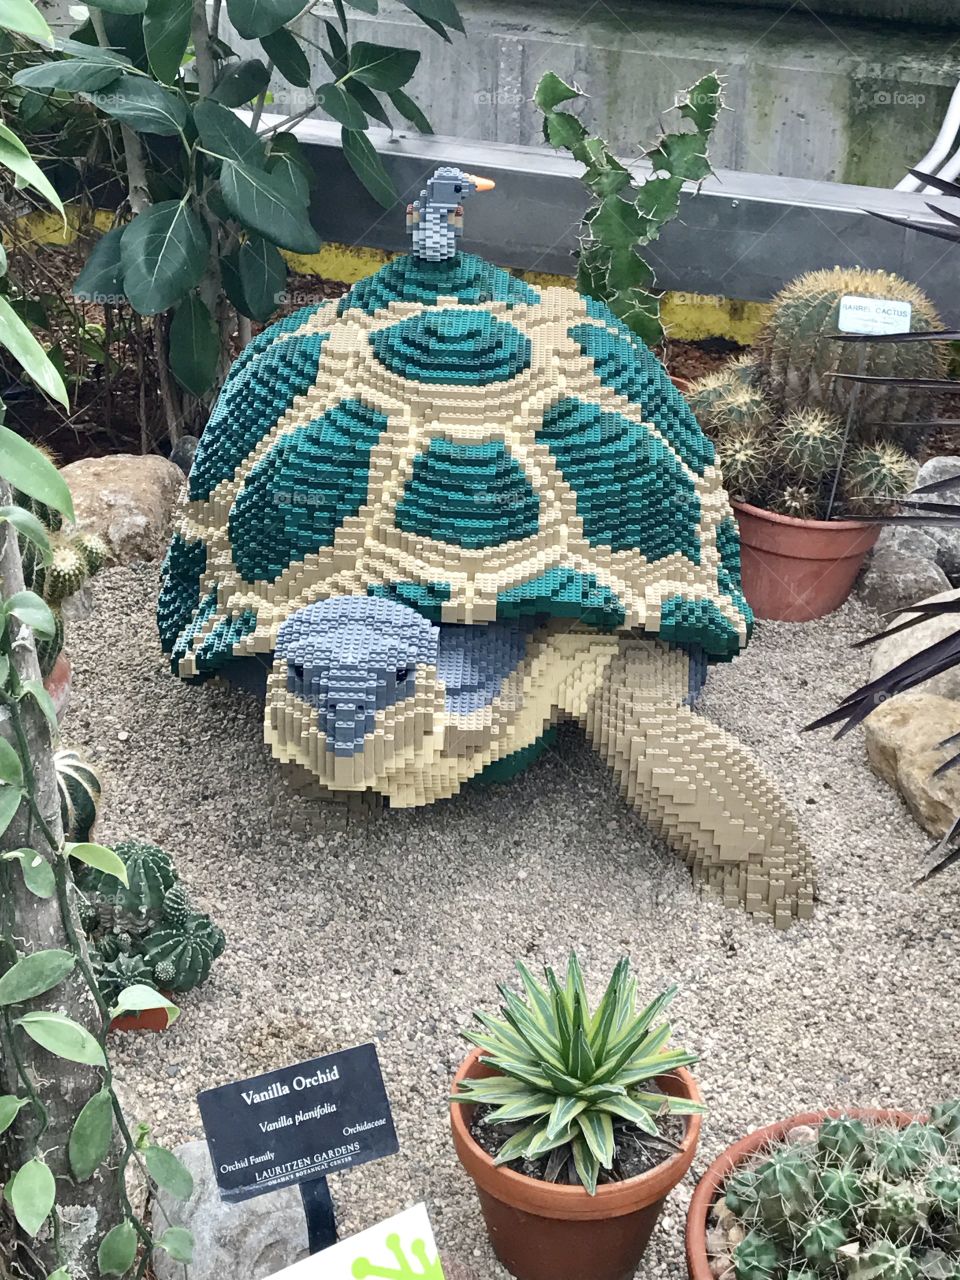 Turtle lego